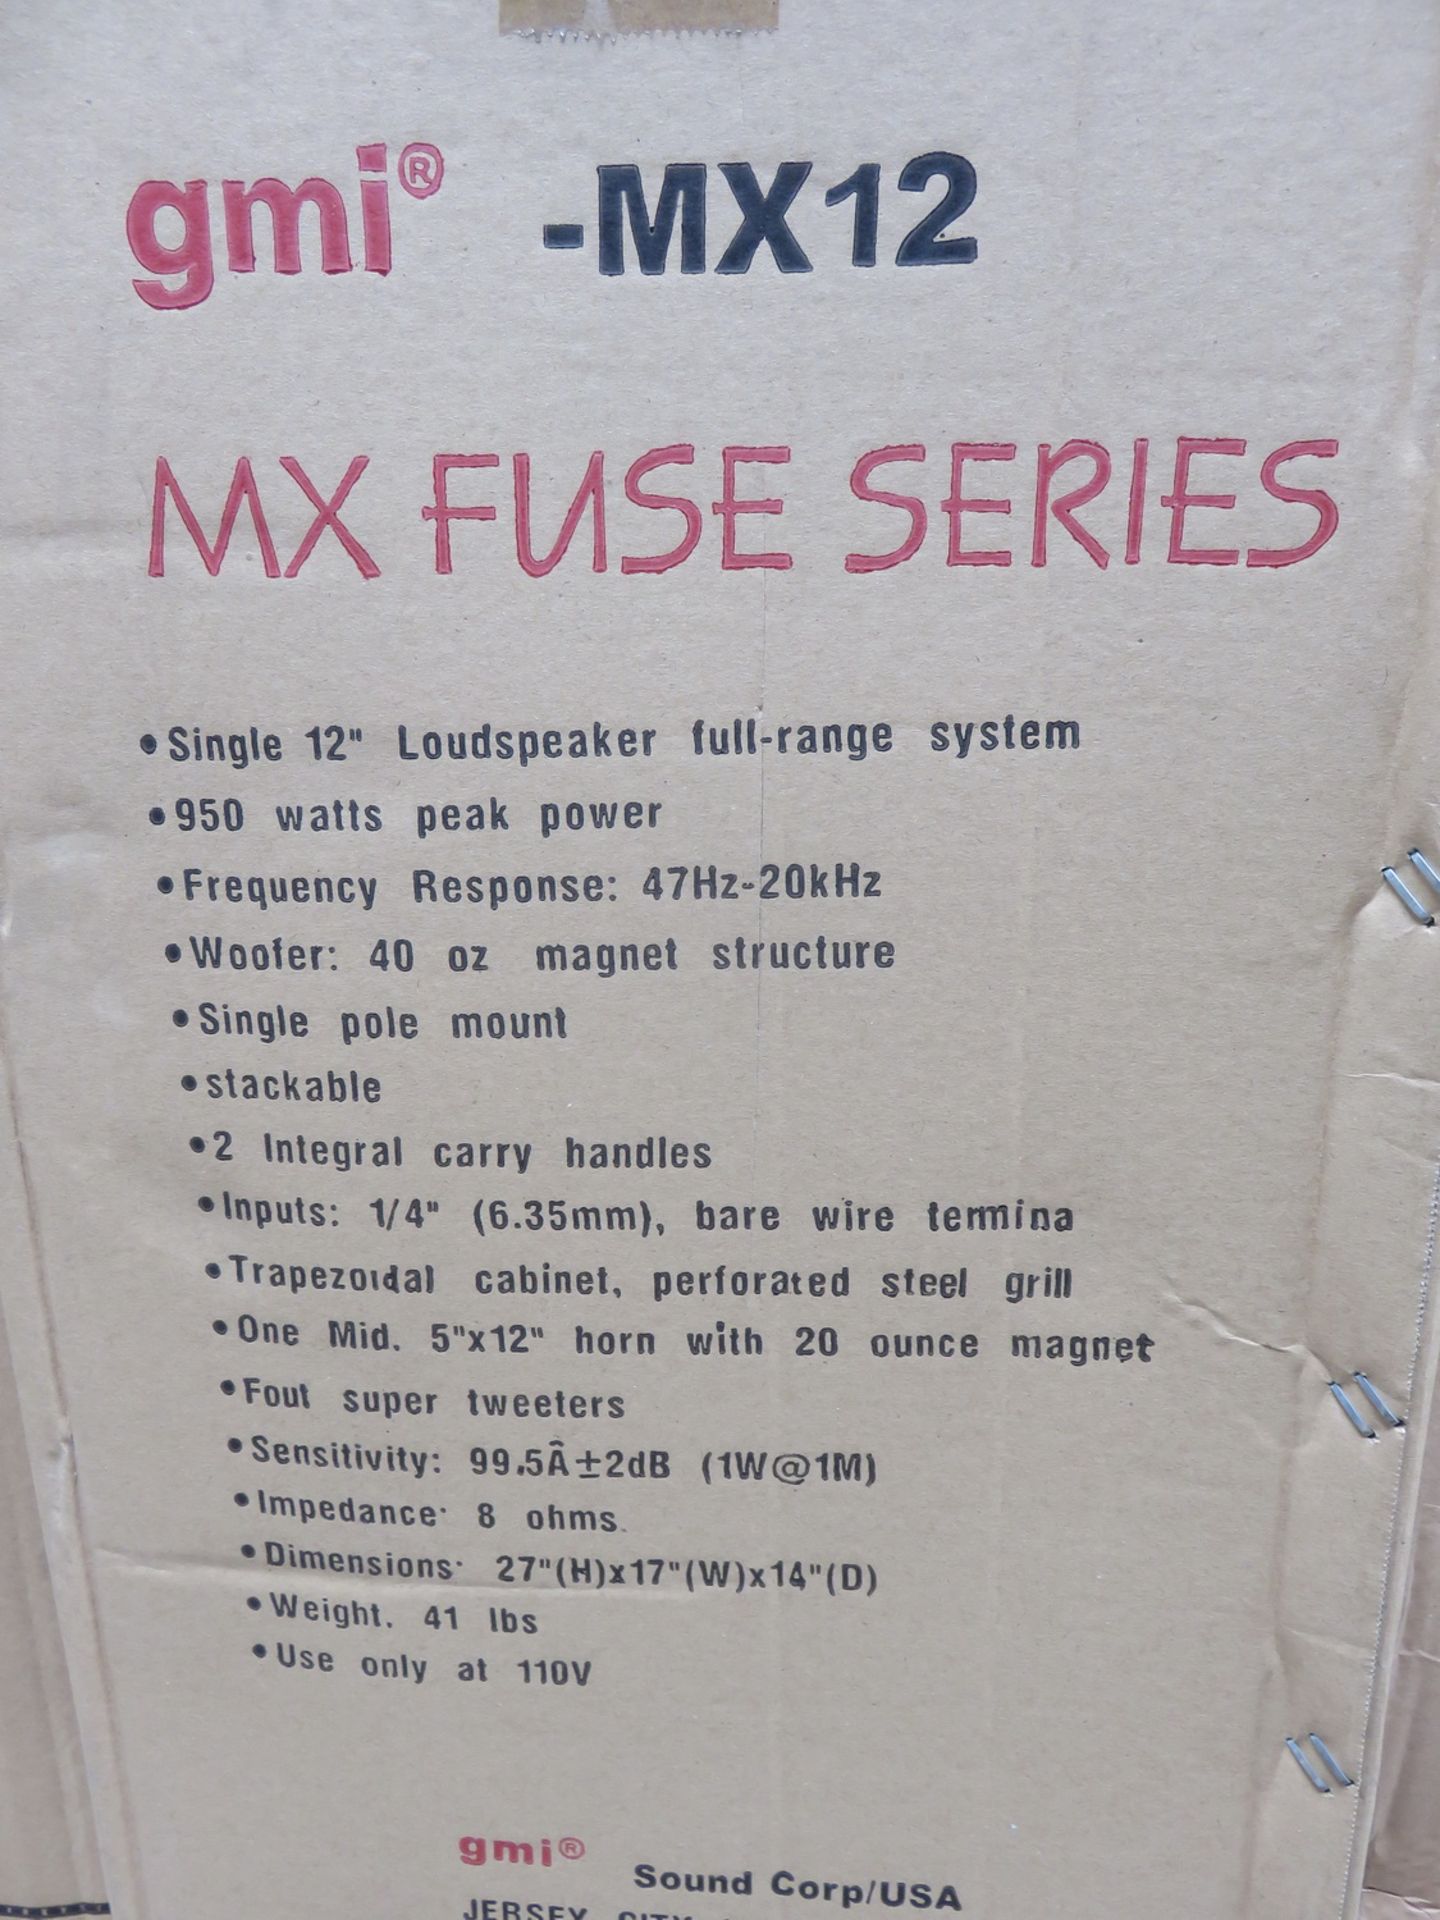 UNITS - GMI MX12, MX FUSE SERIES FULL RANGE 12" LOUDSPEAKERS (IN BOX) - Image 3 of 4